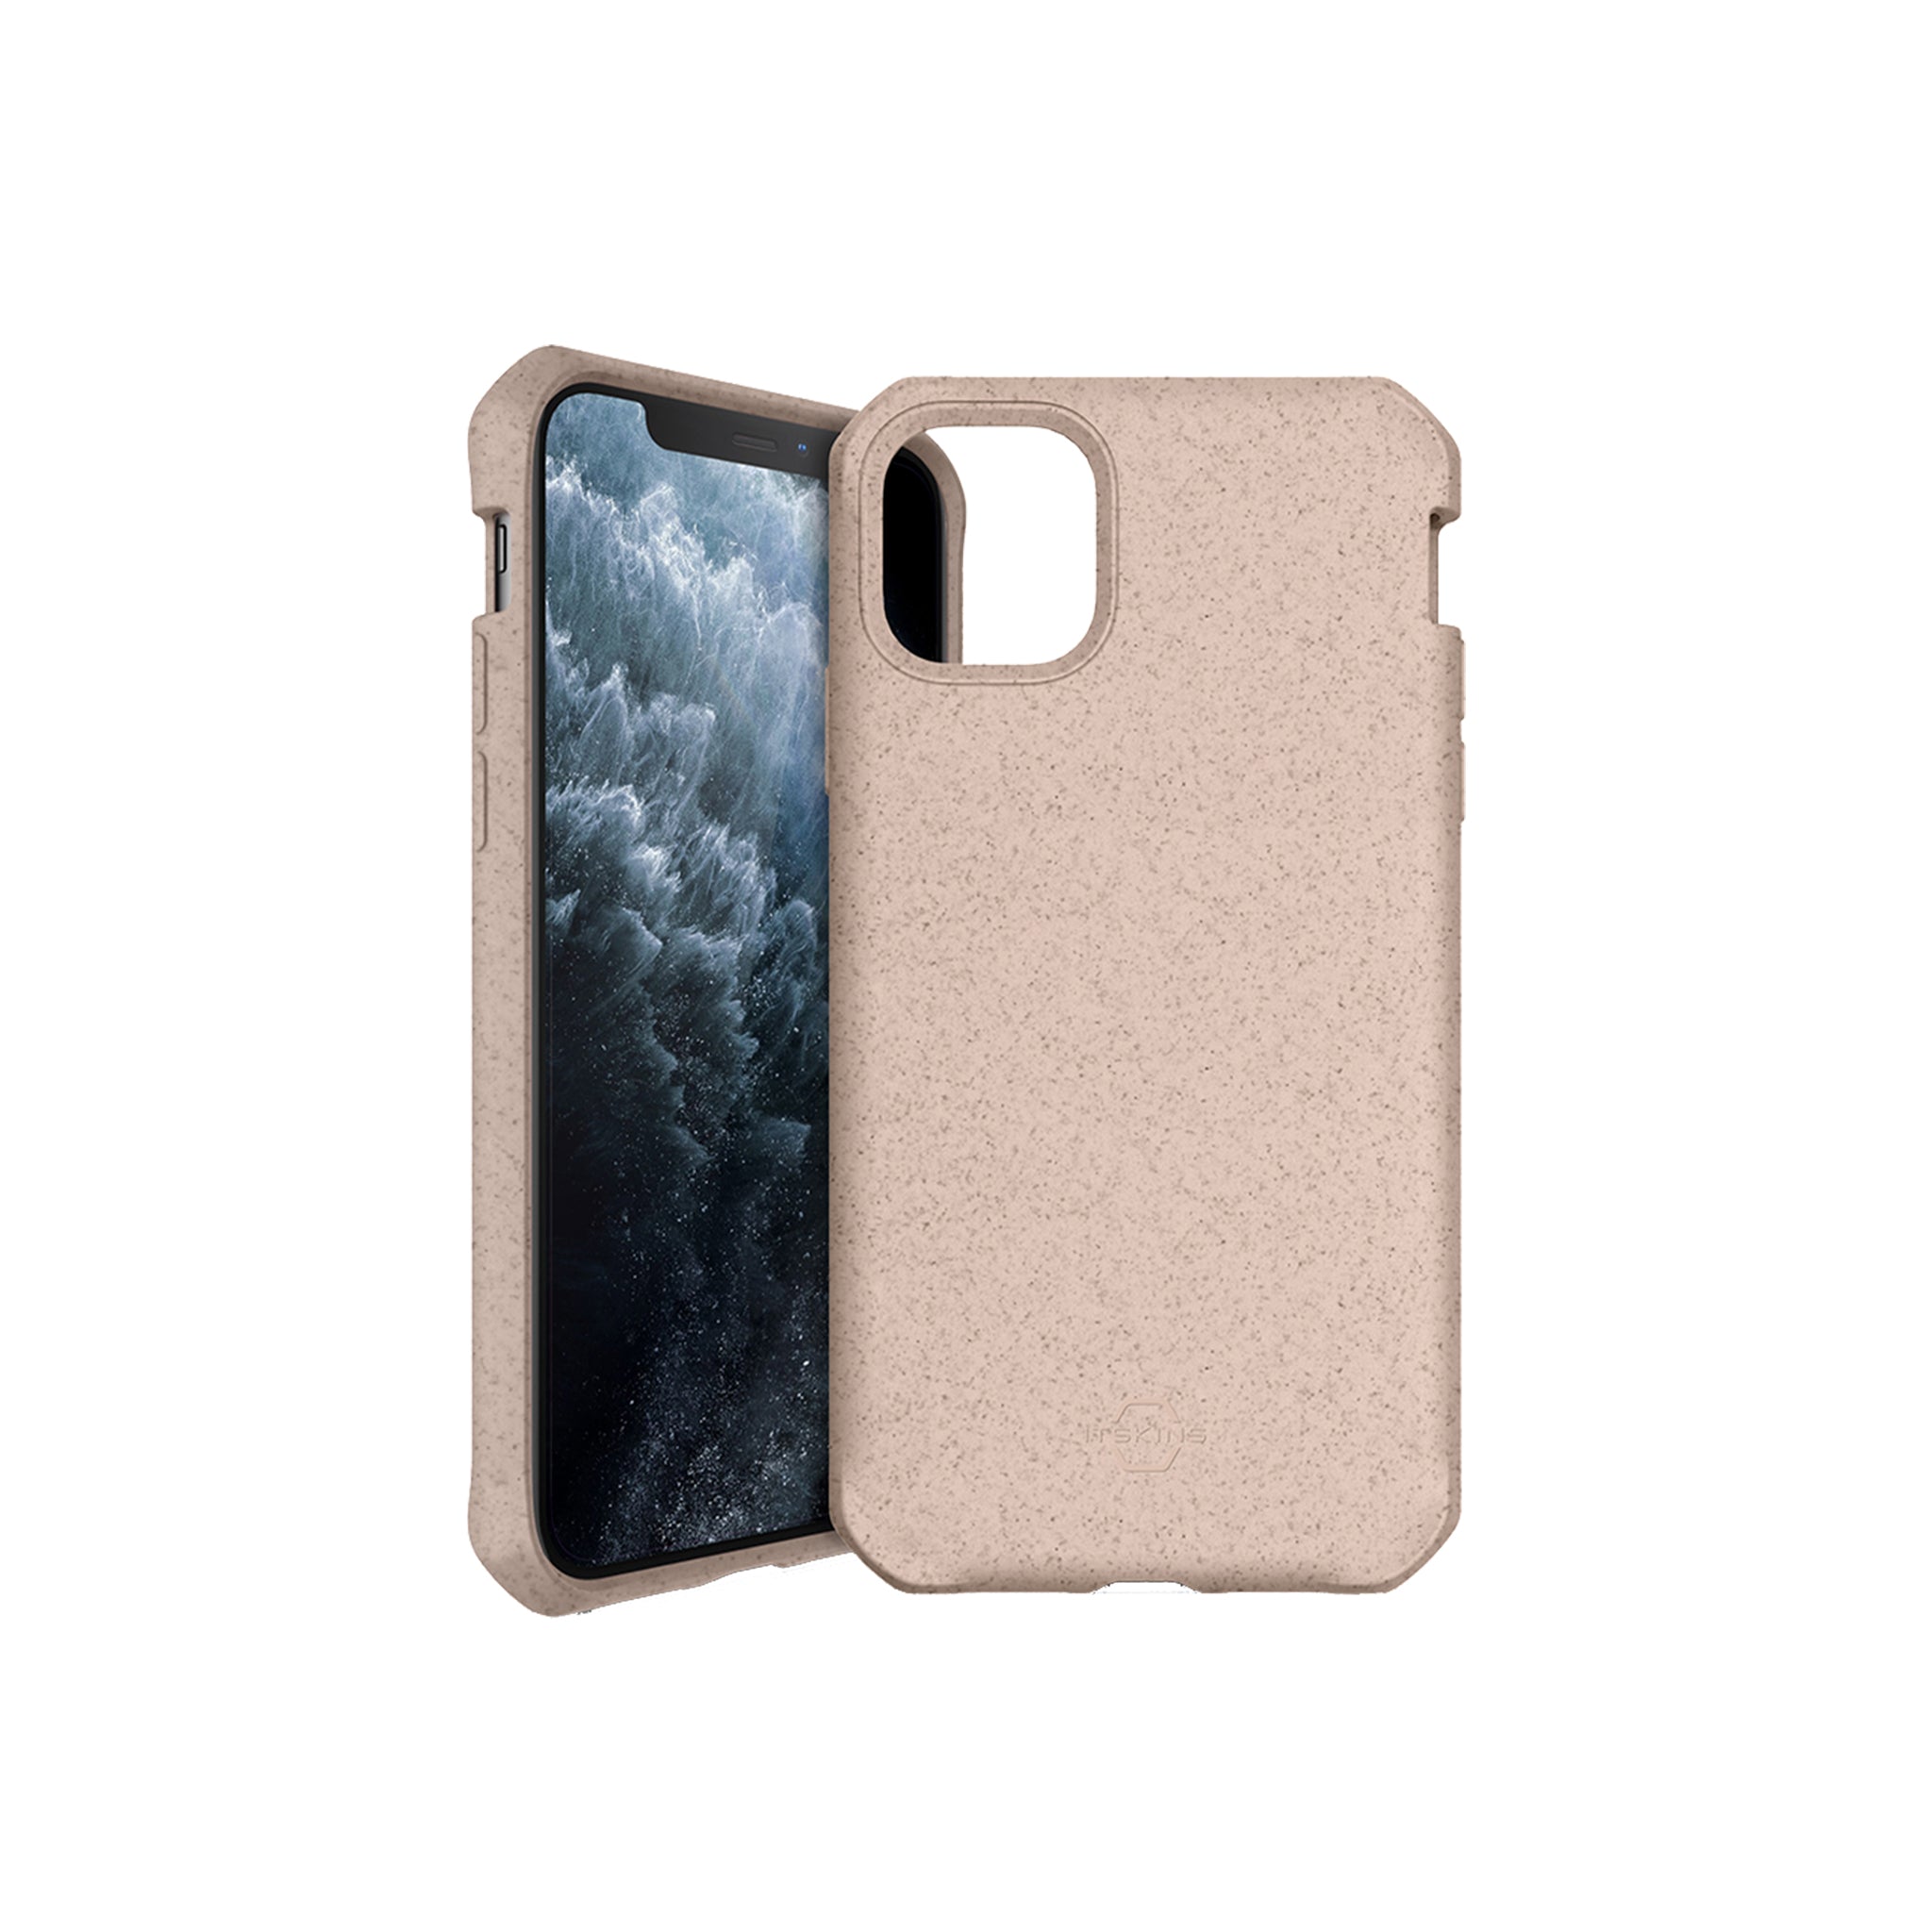 Itskins - Feroniabio Terra Biodegradable Case For Apple Iphone 11 Pro Max - Natural